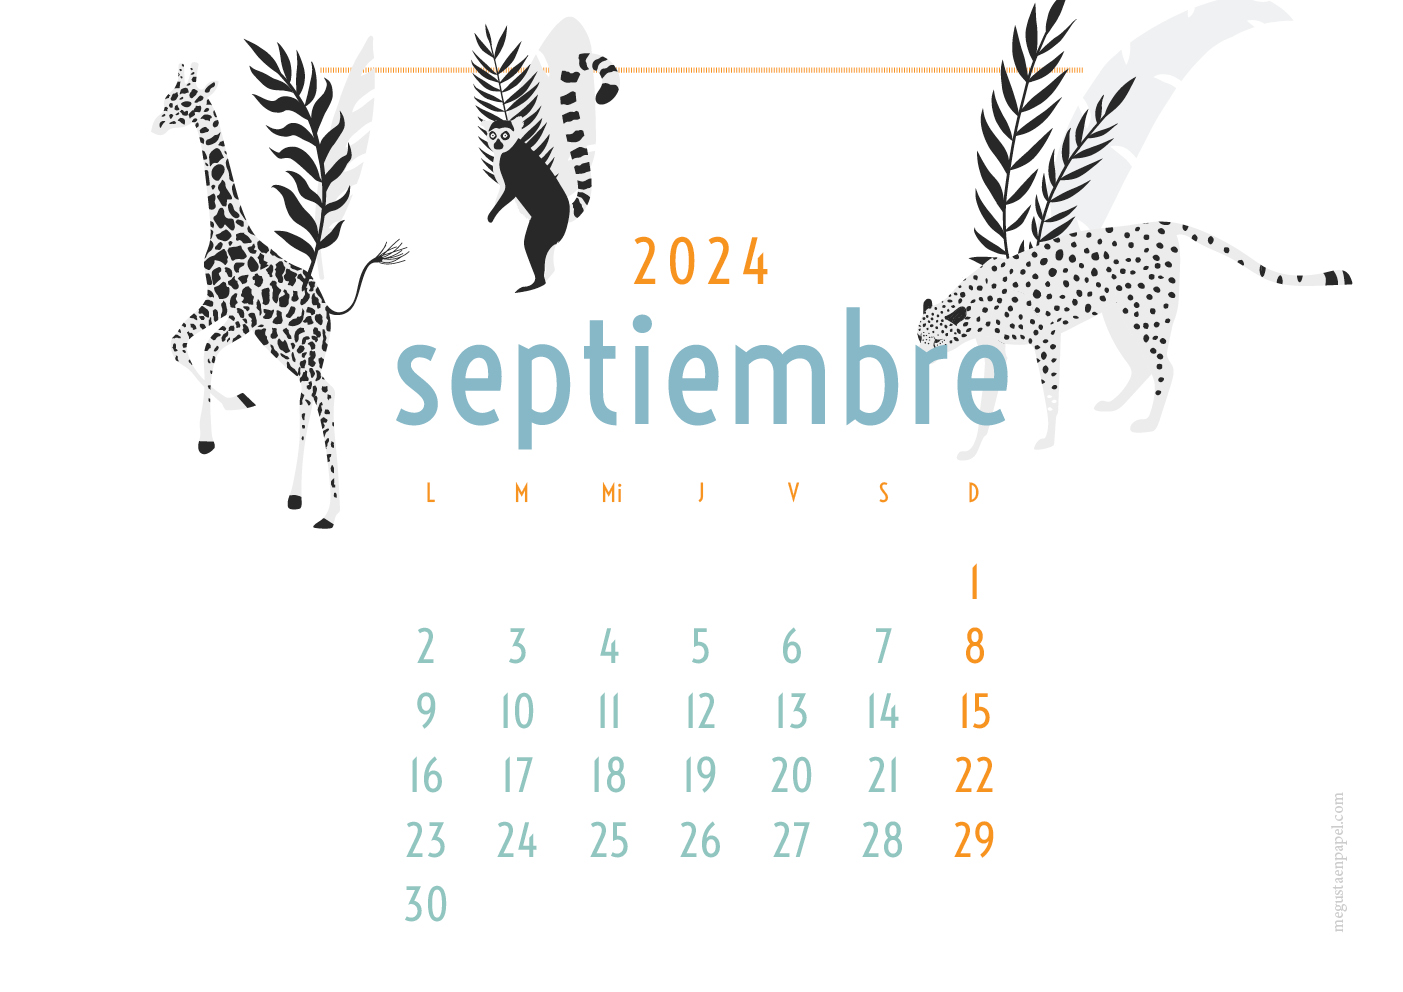 calendario septiembre 2023 'jungla'